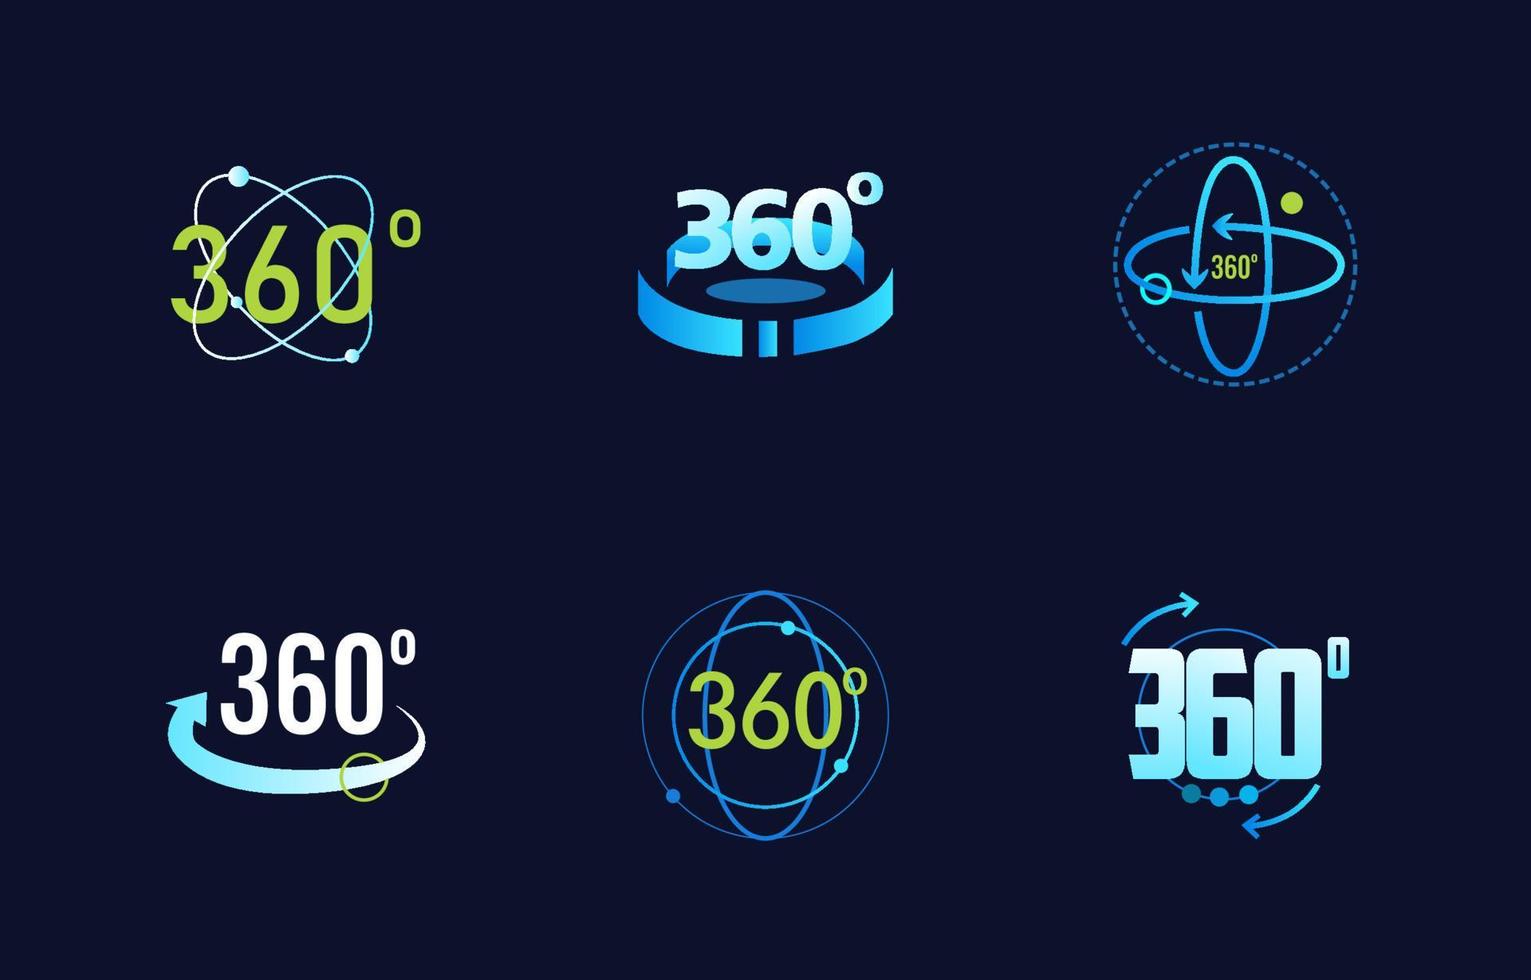 360 technologie logo set vector